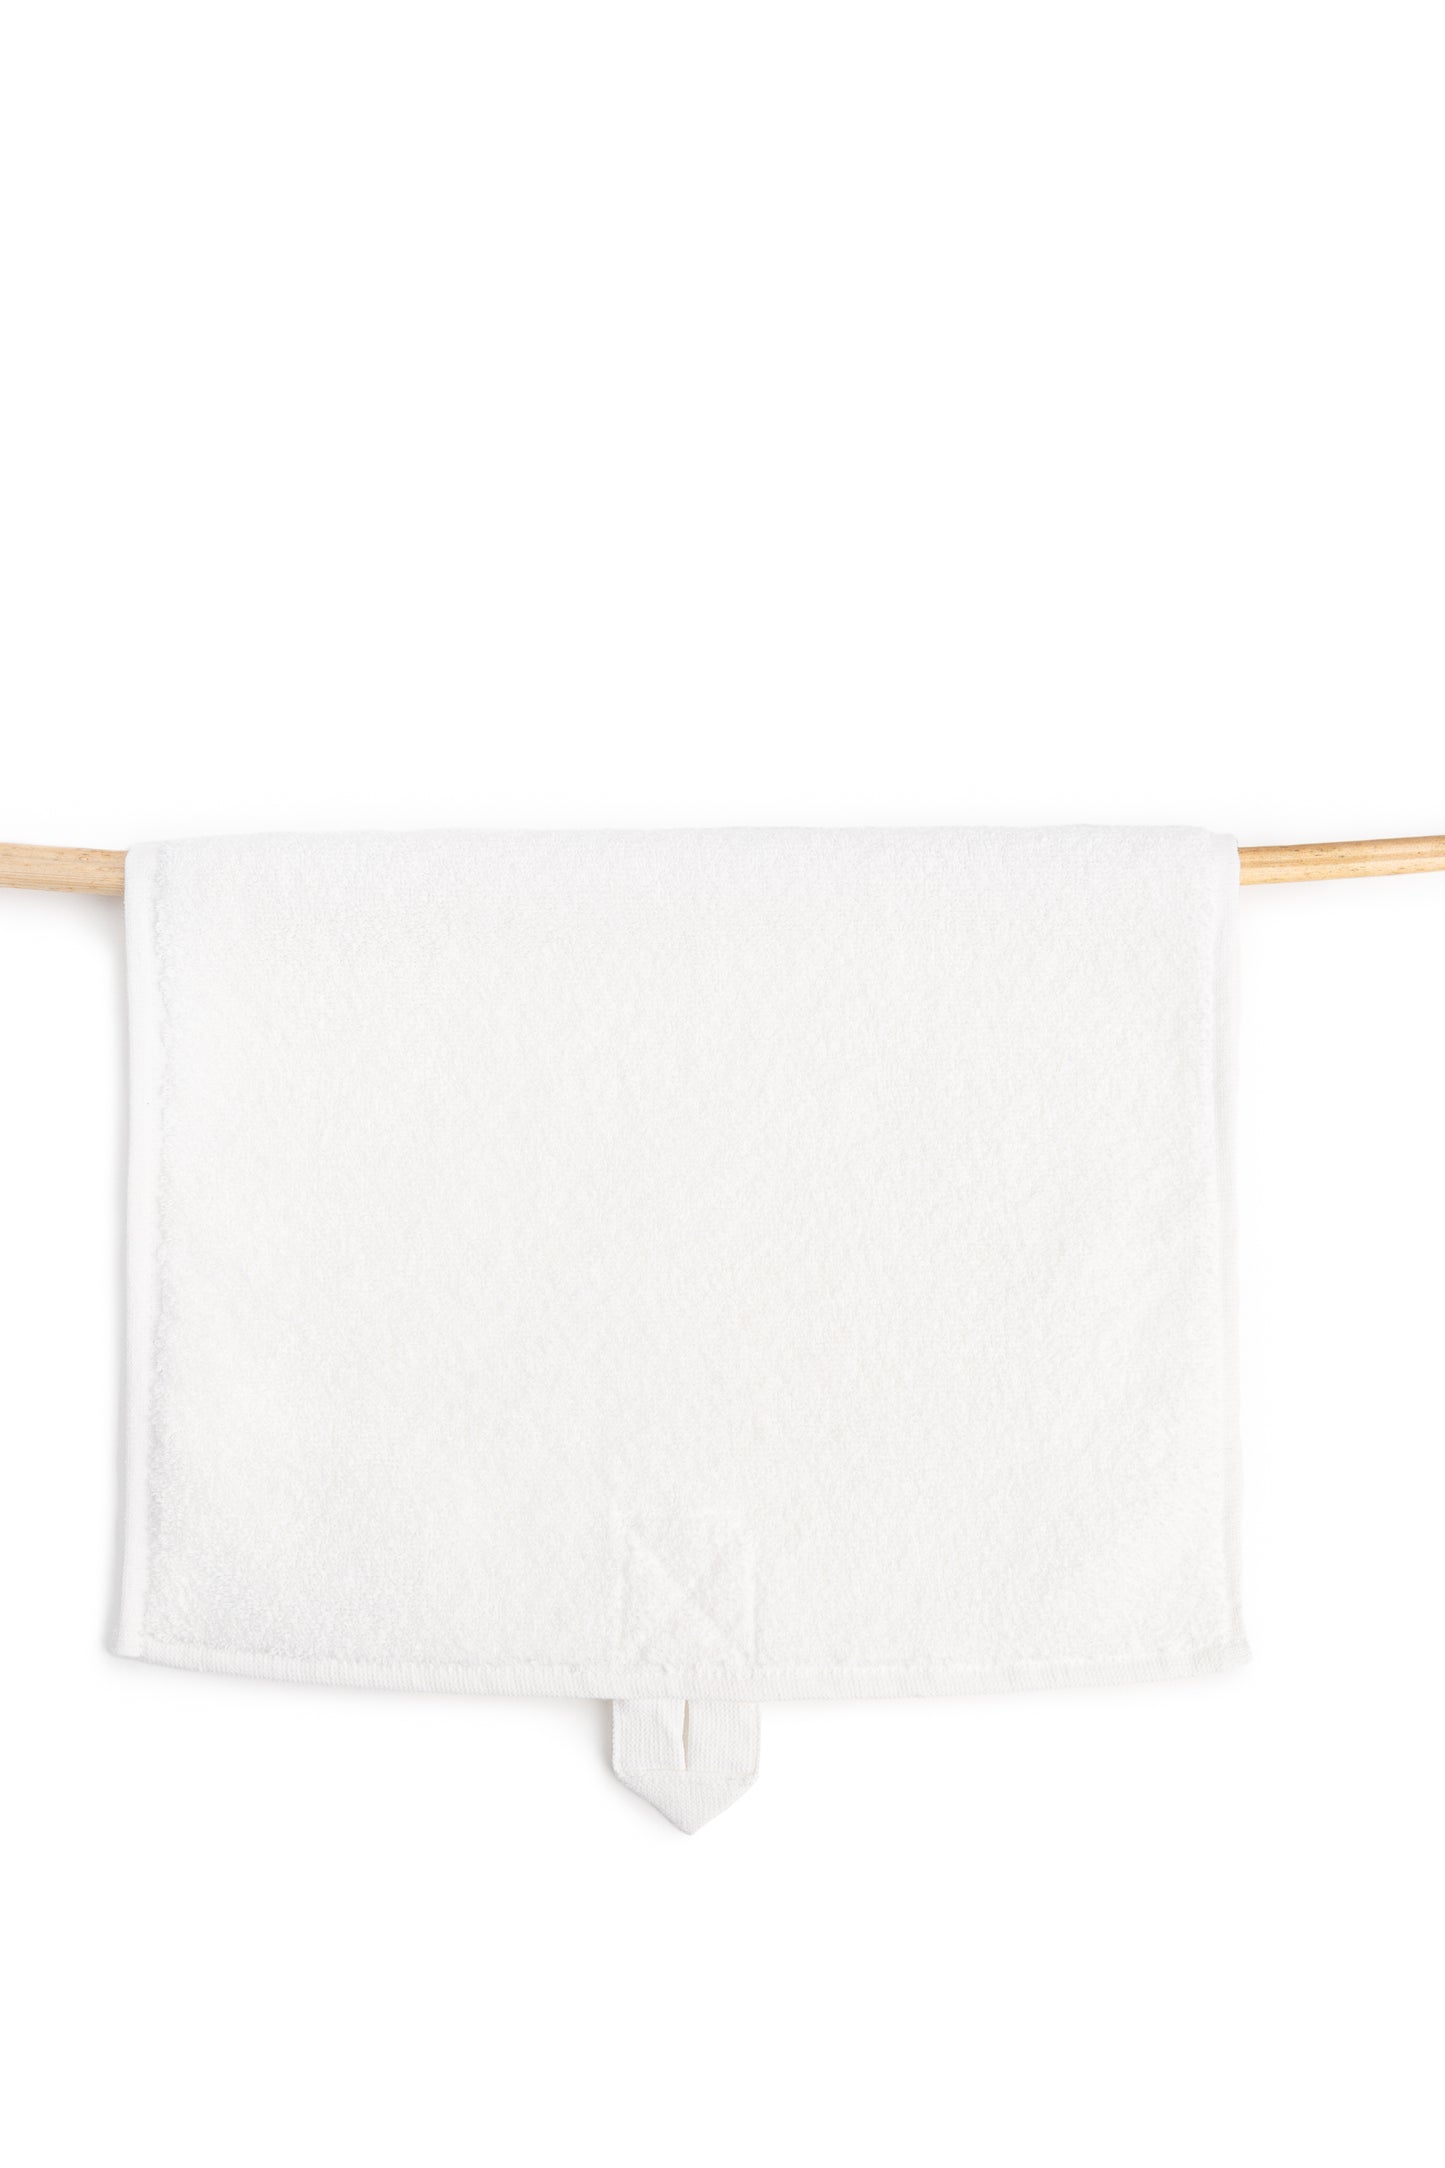 Hanging white hand towel